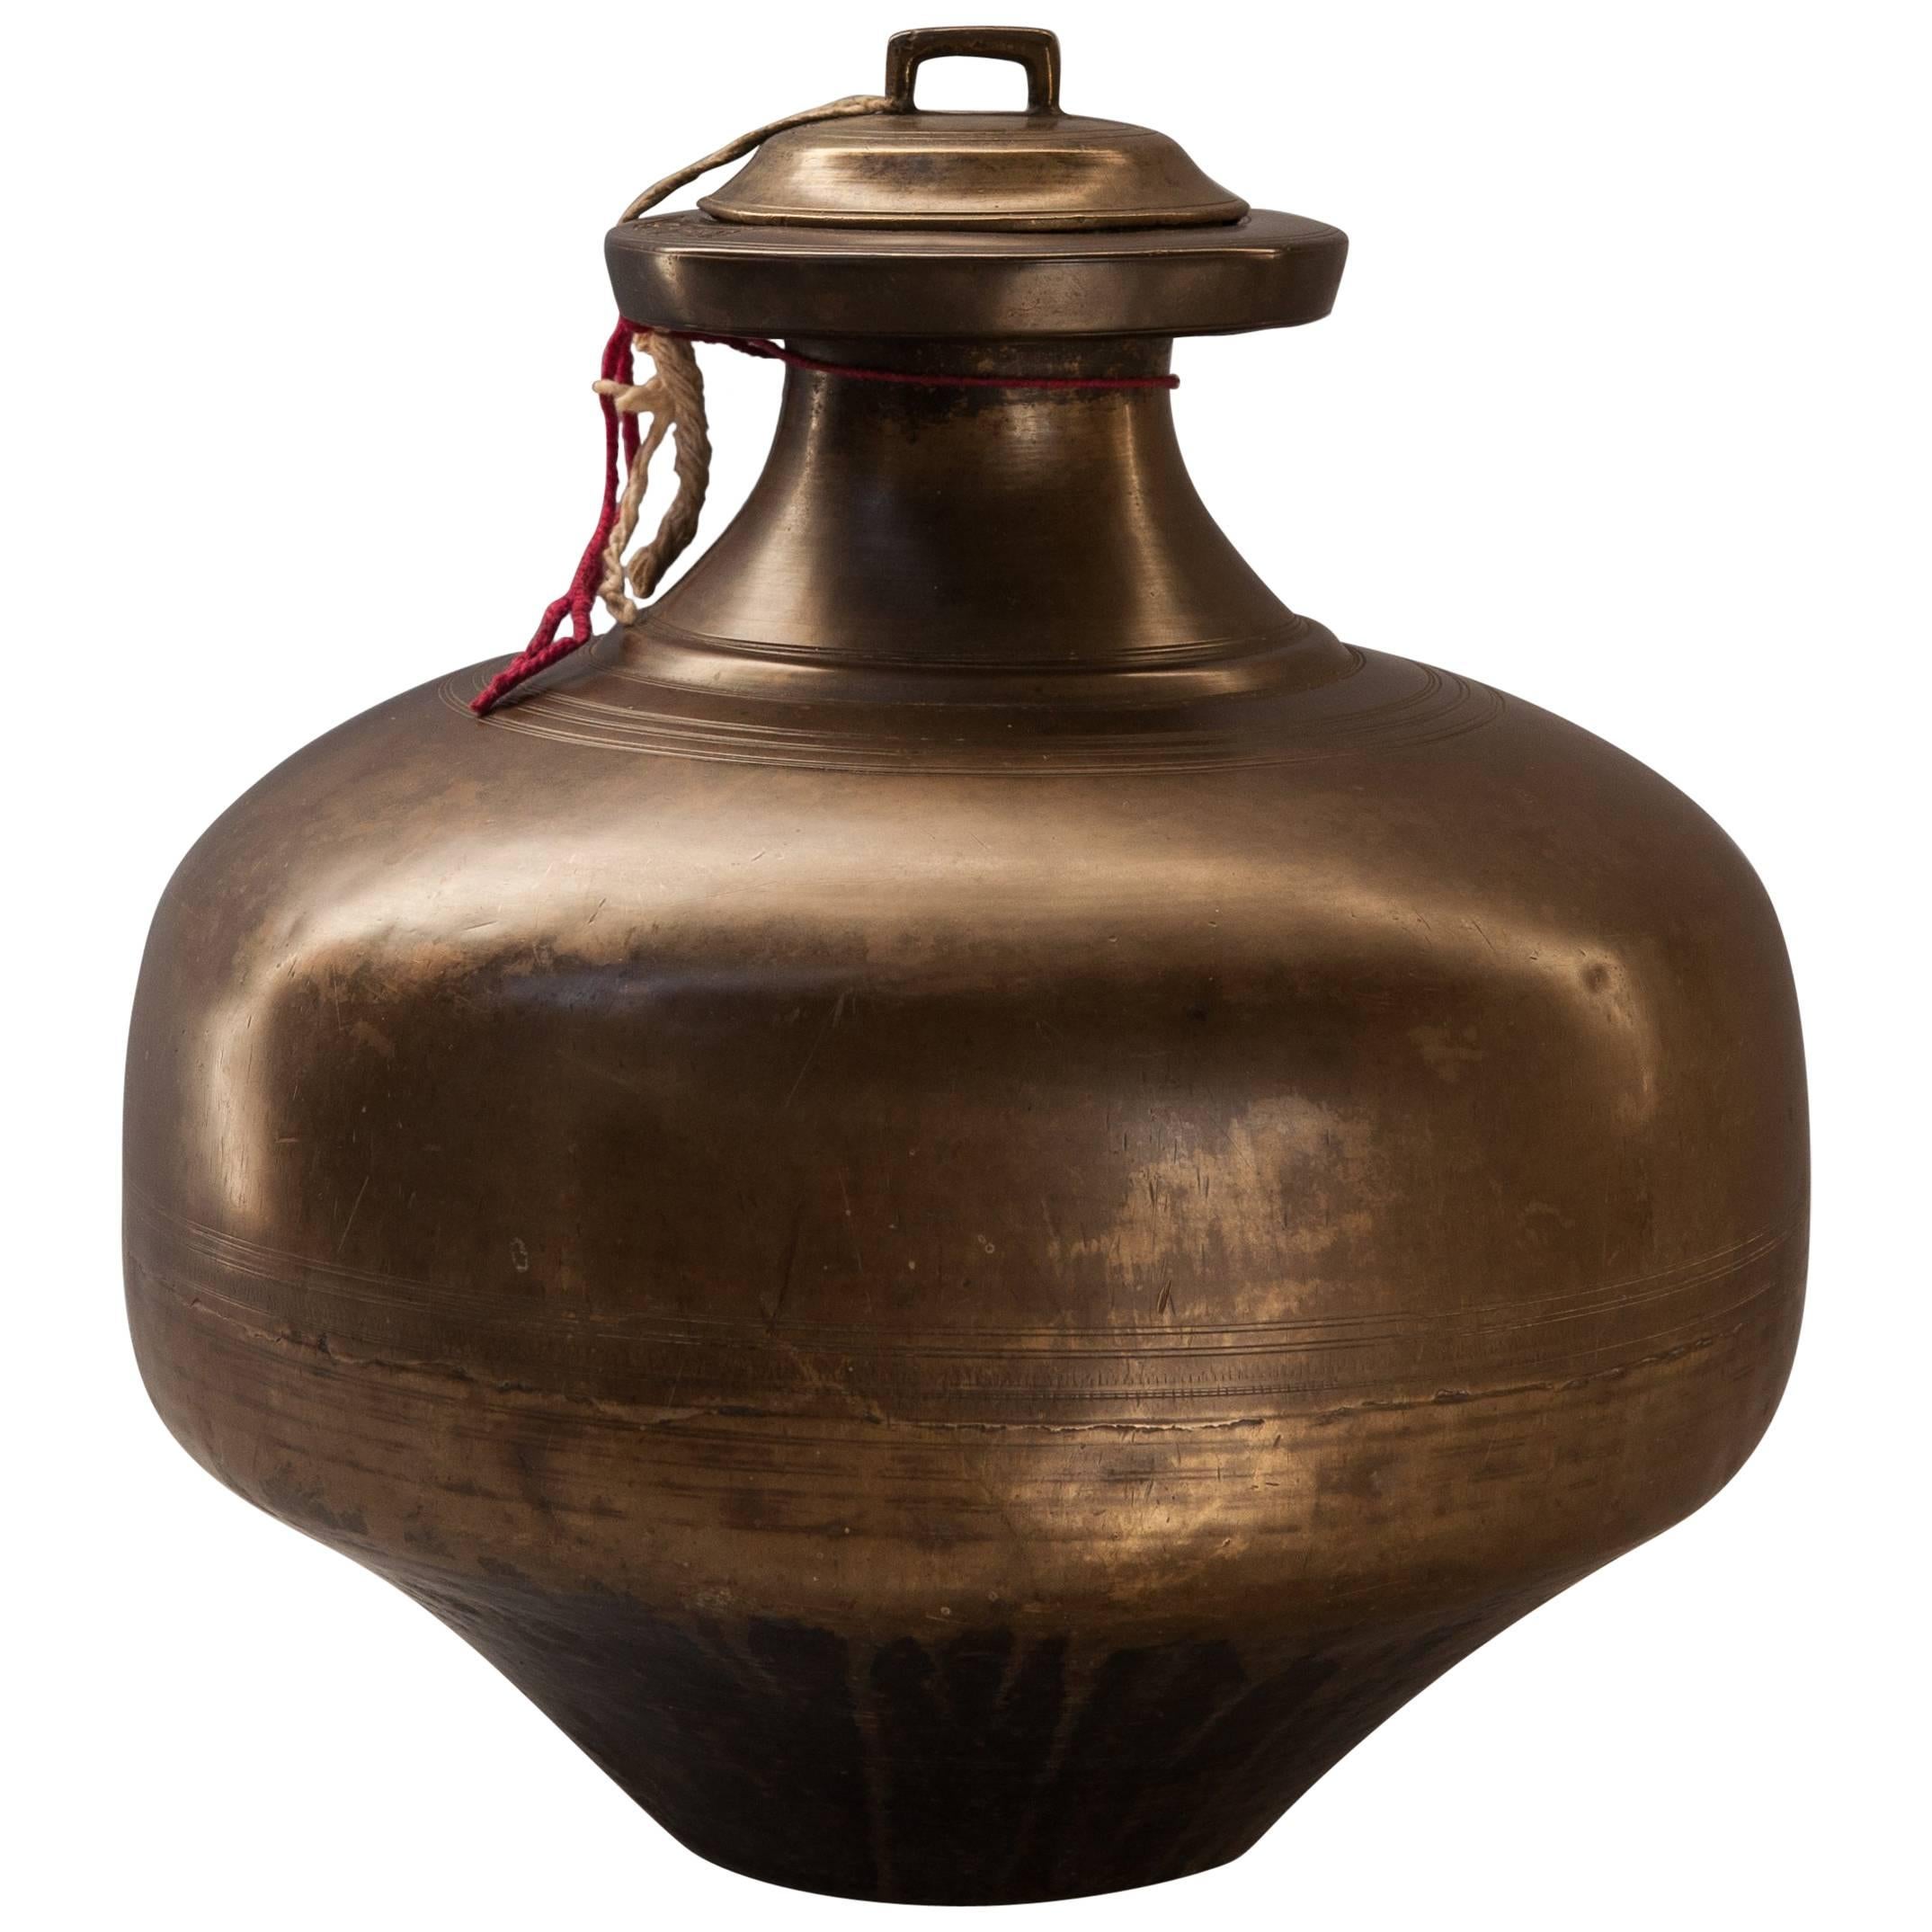 Bengali Brass Water Pot with Cap, Mid-20th Century, Bengal, India